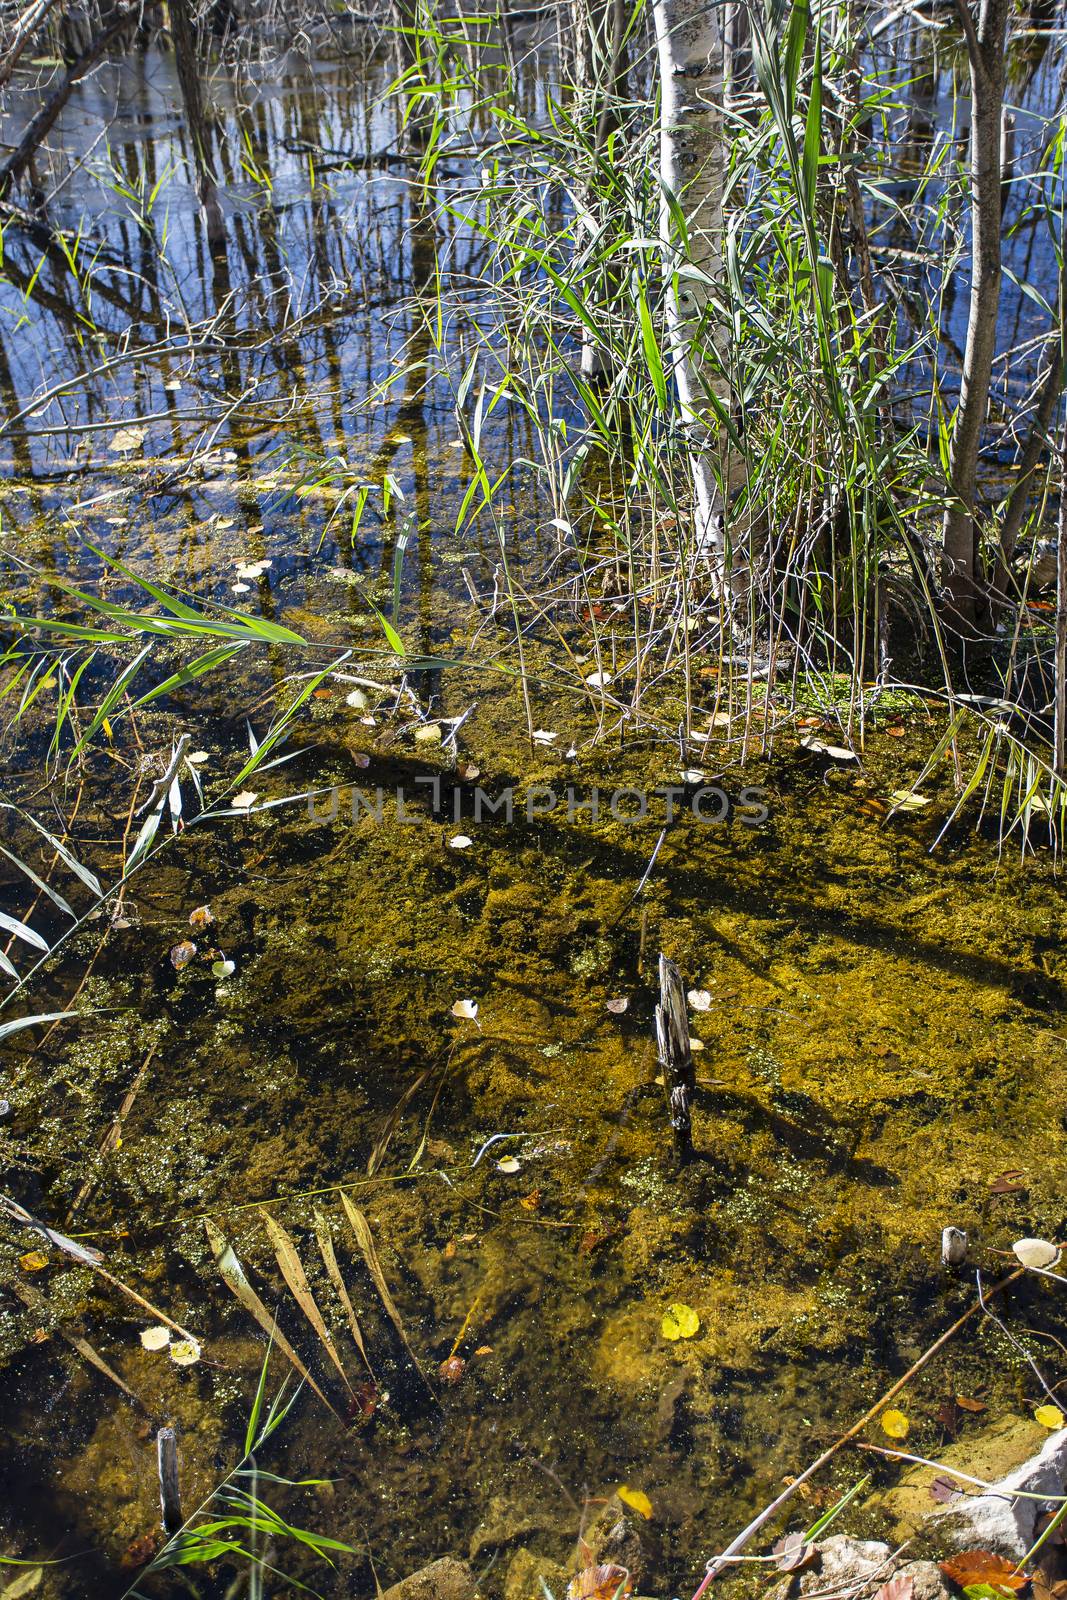 Swamp water by mypstudio